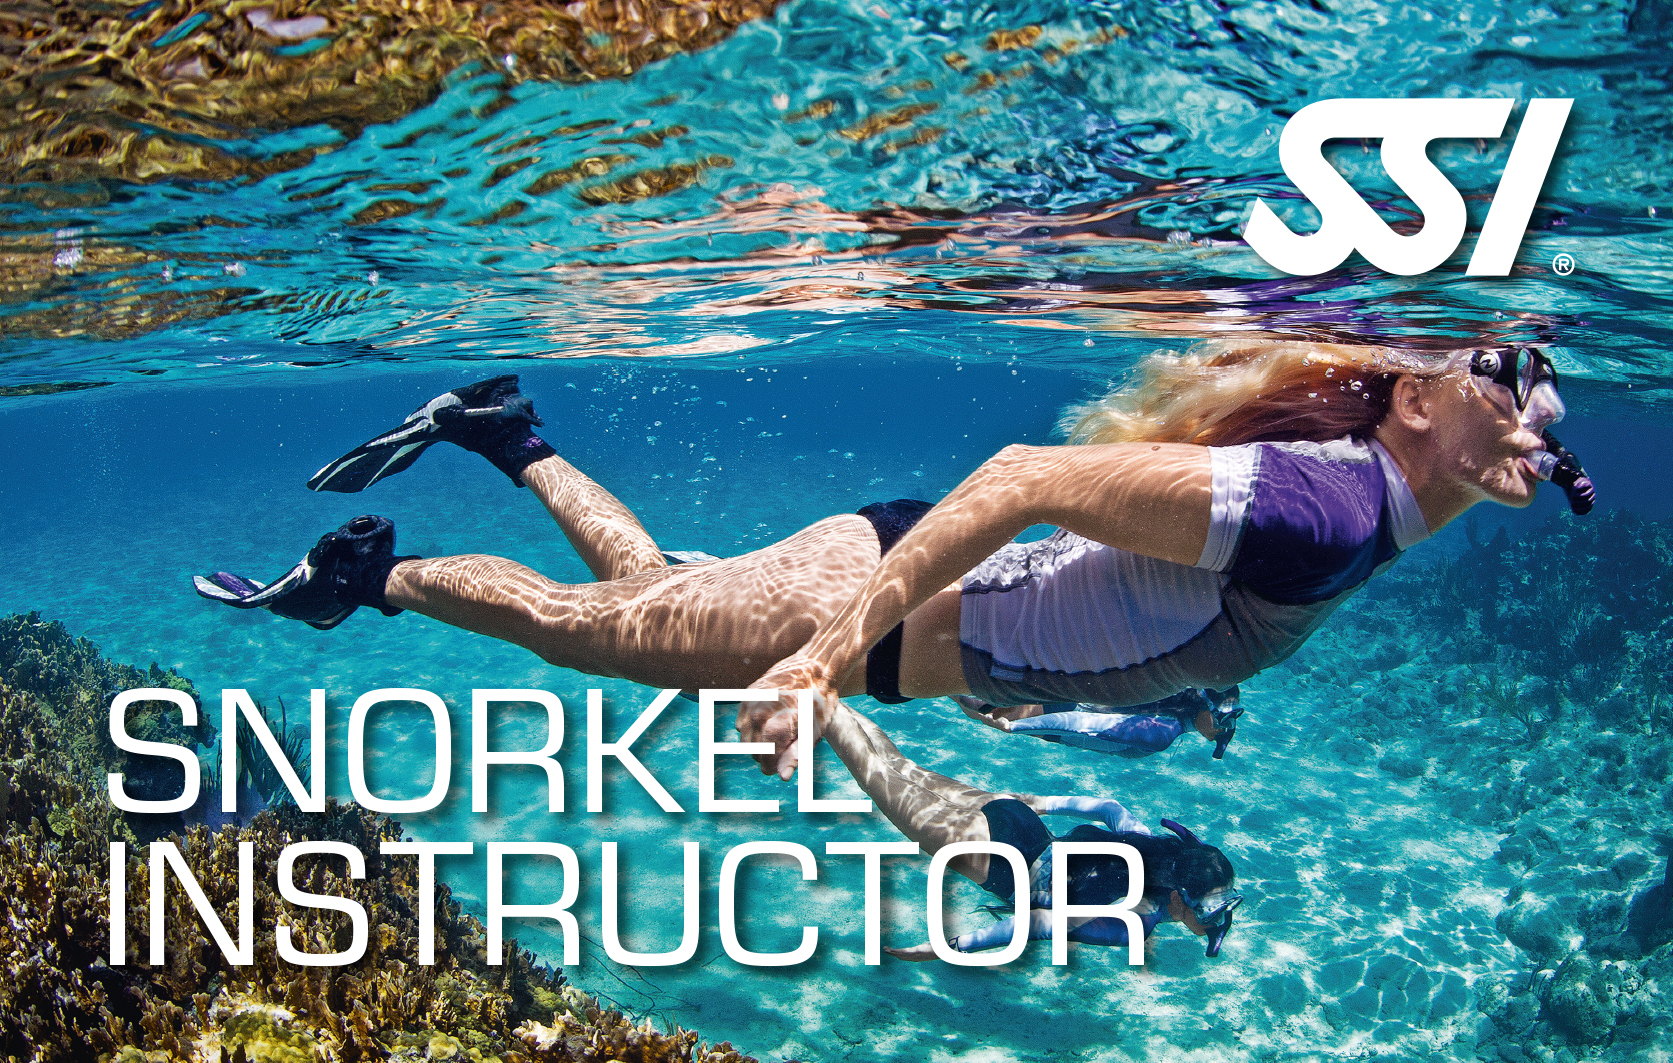 Snorkel-Instructor